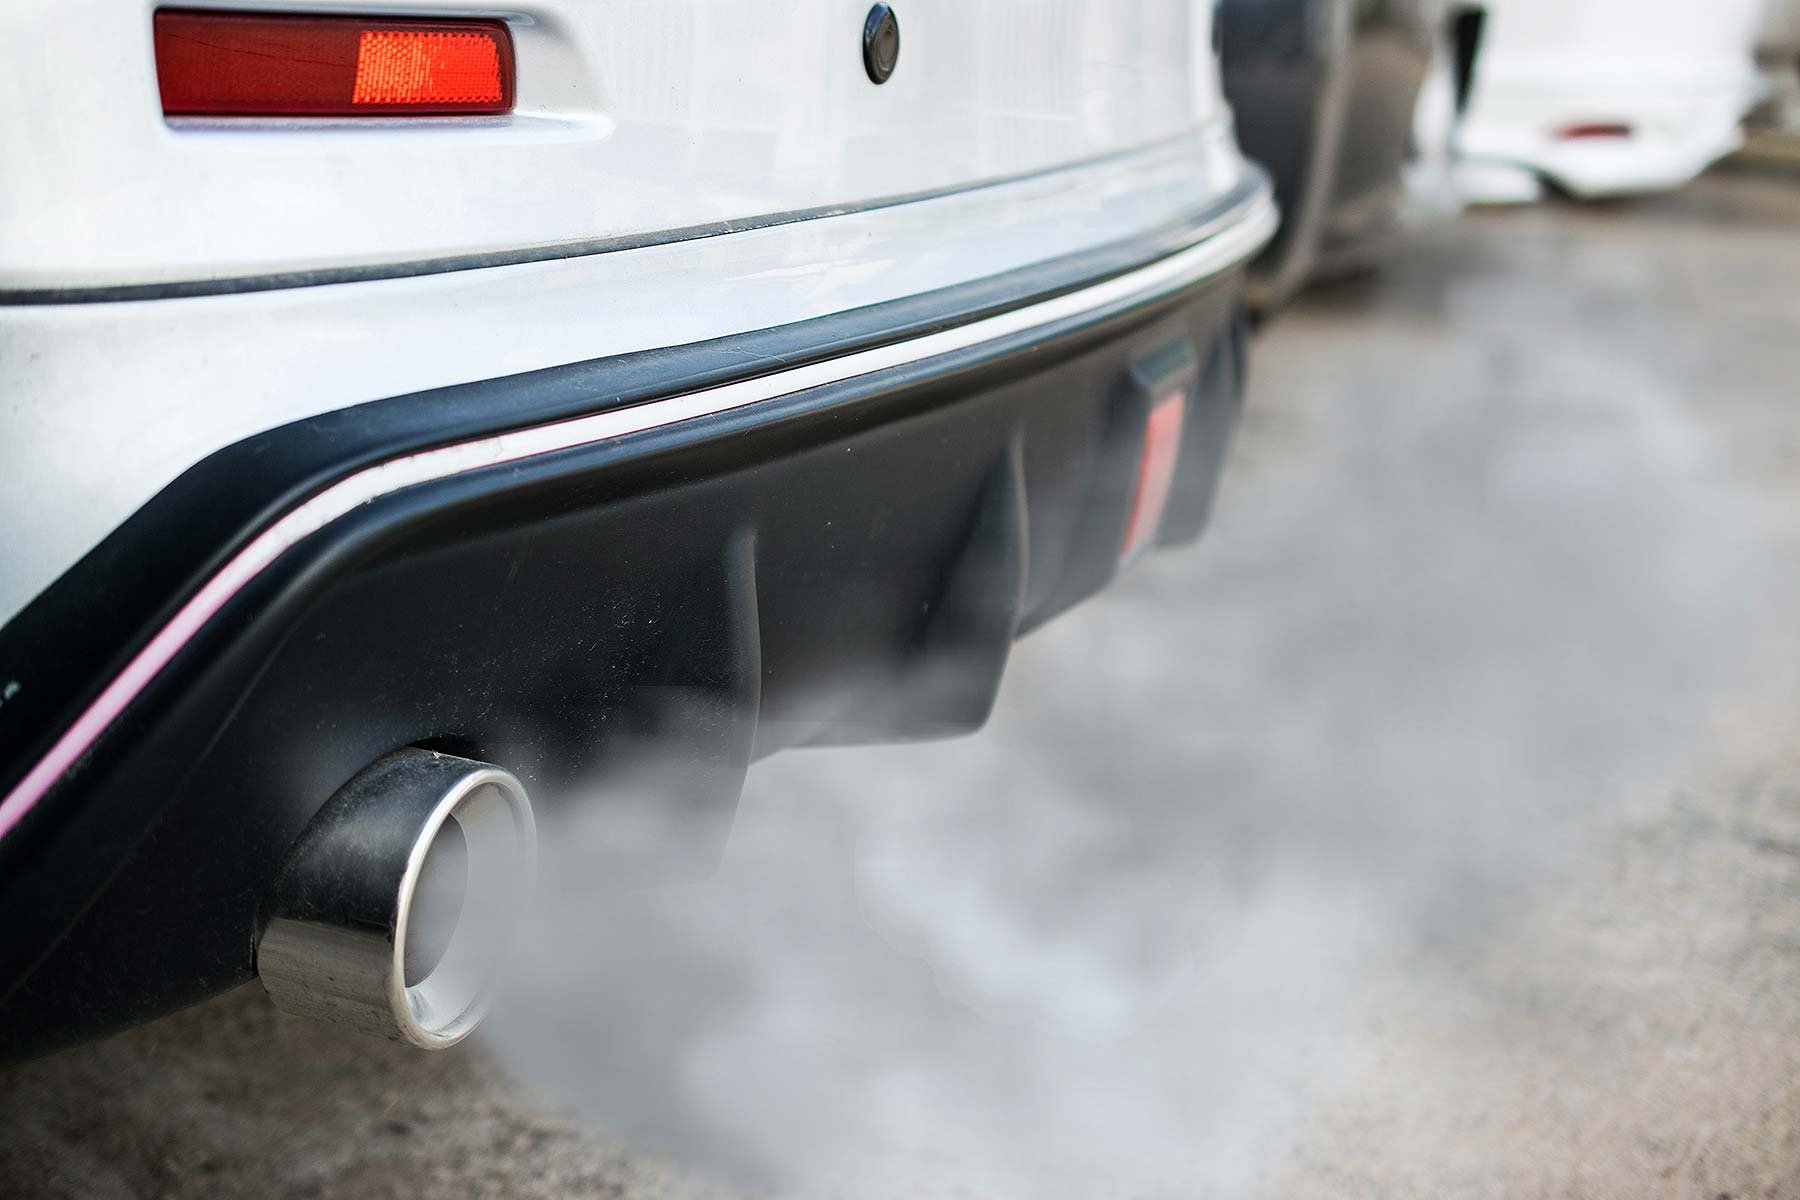 More information about "Αυξήθηκαν οι εκπομπές CO2 στην ΕΕ το 2017 λόγω αυτοκινήτων"